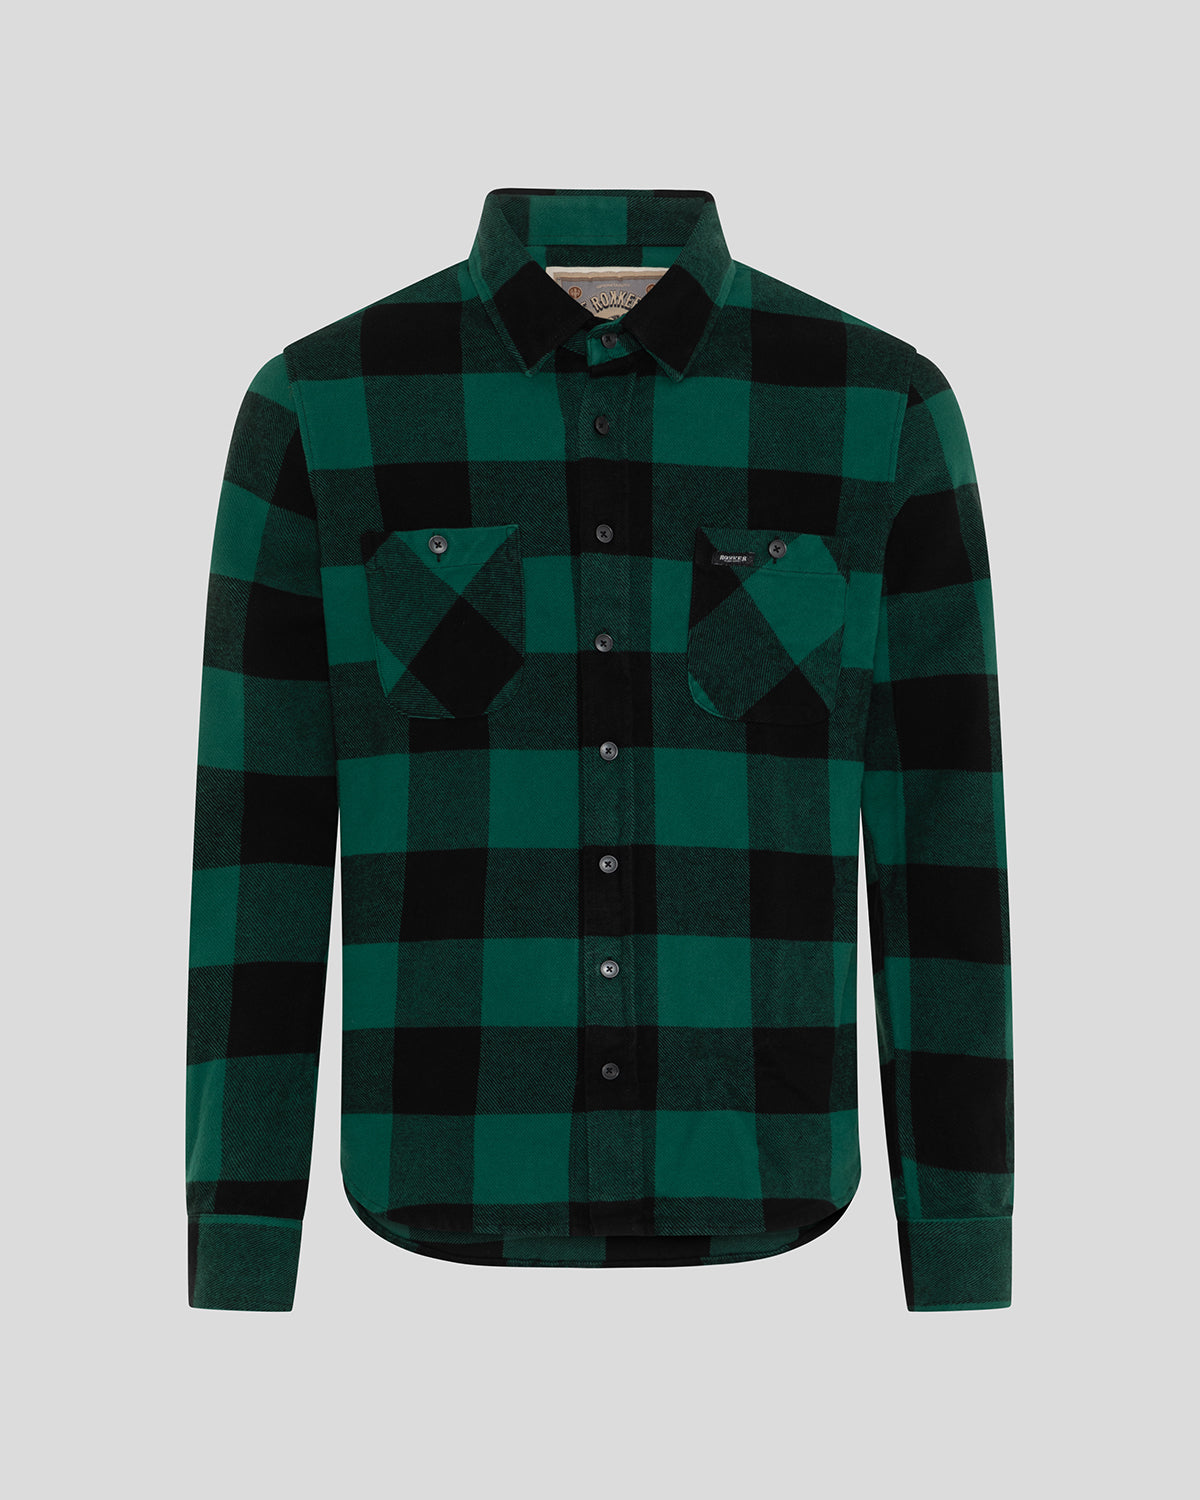 Denver 2 Shirt Green/Black